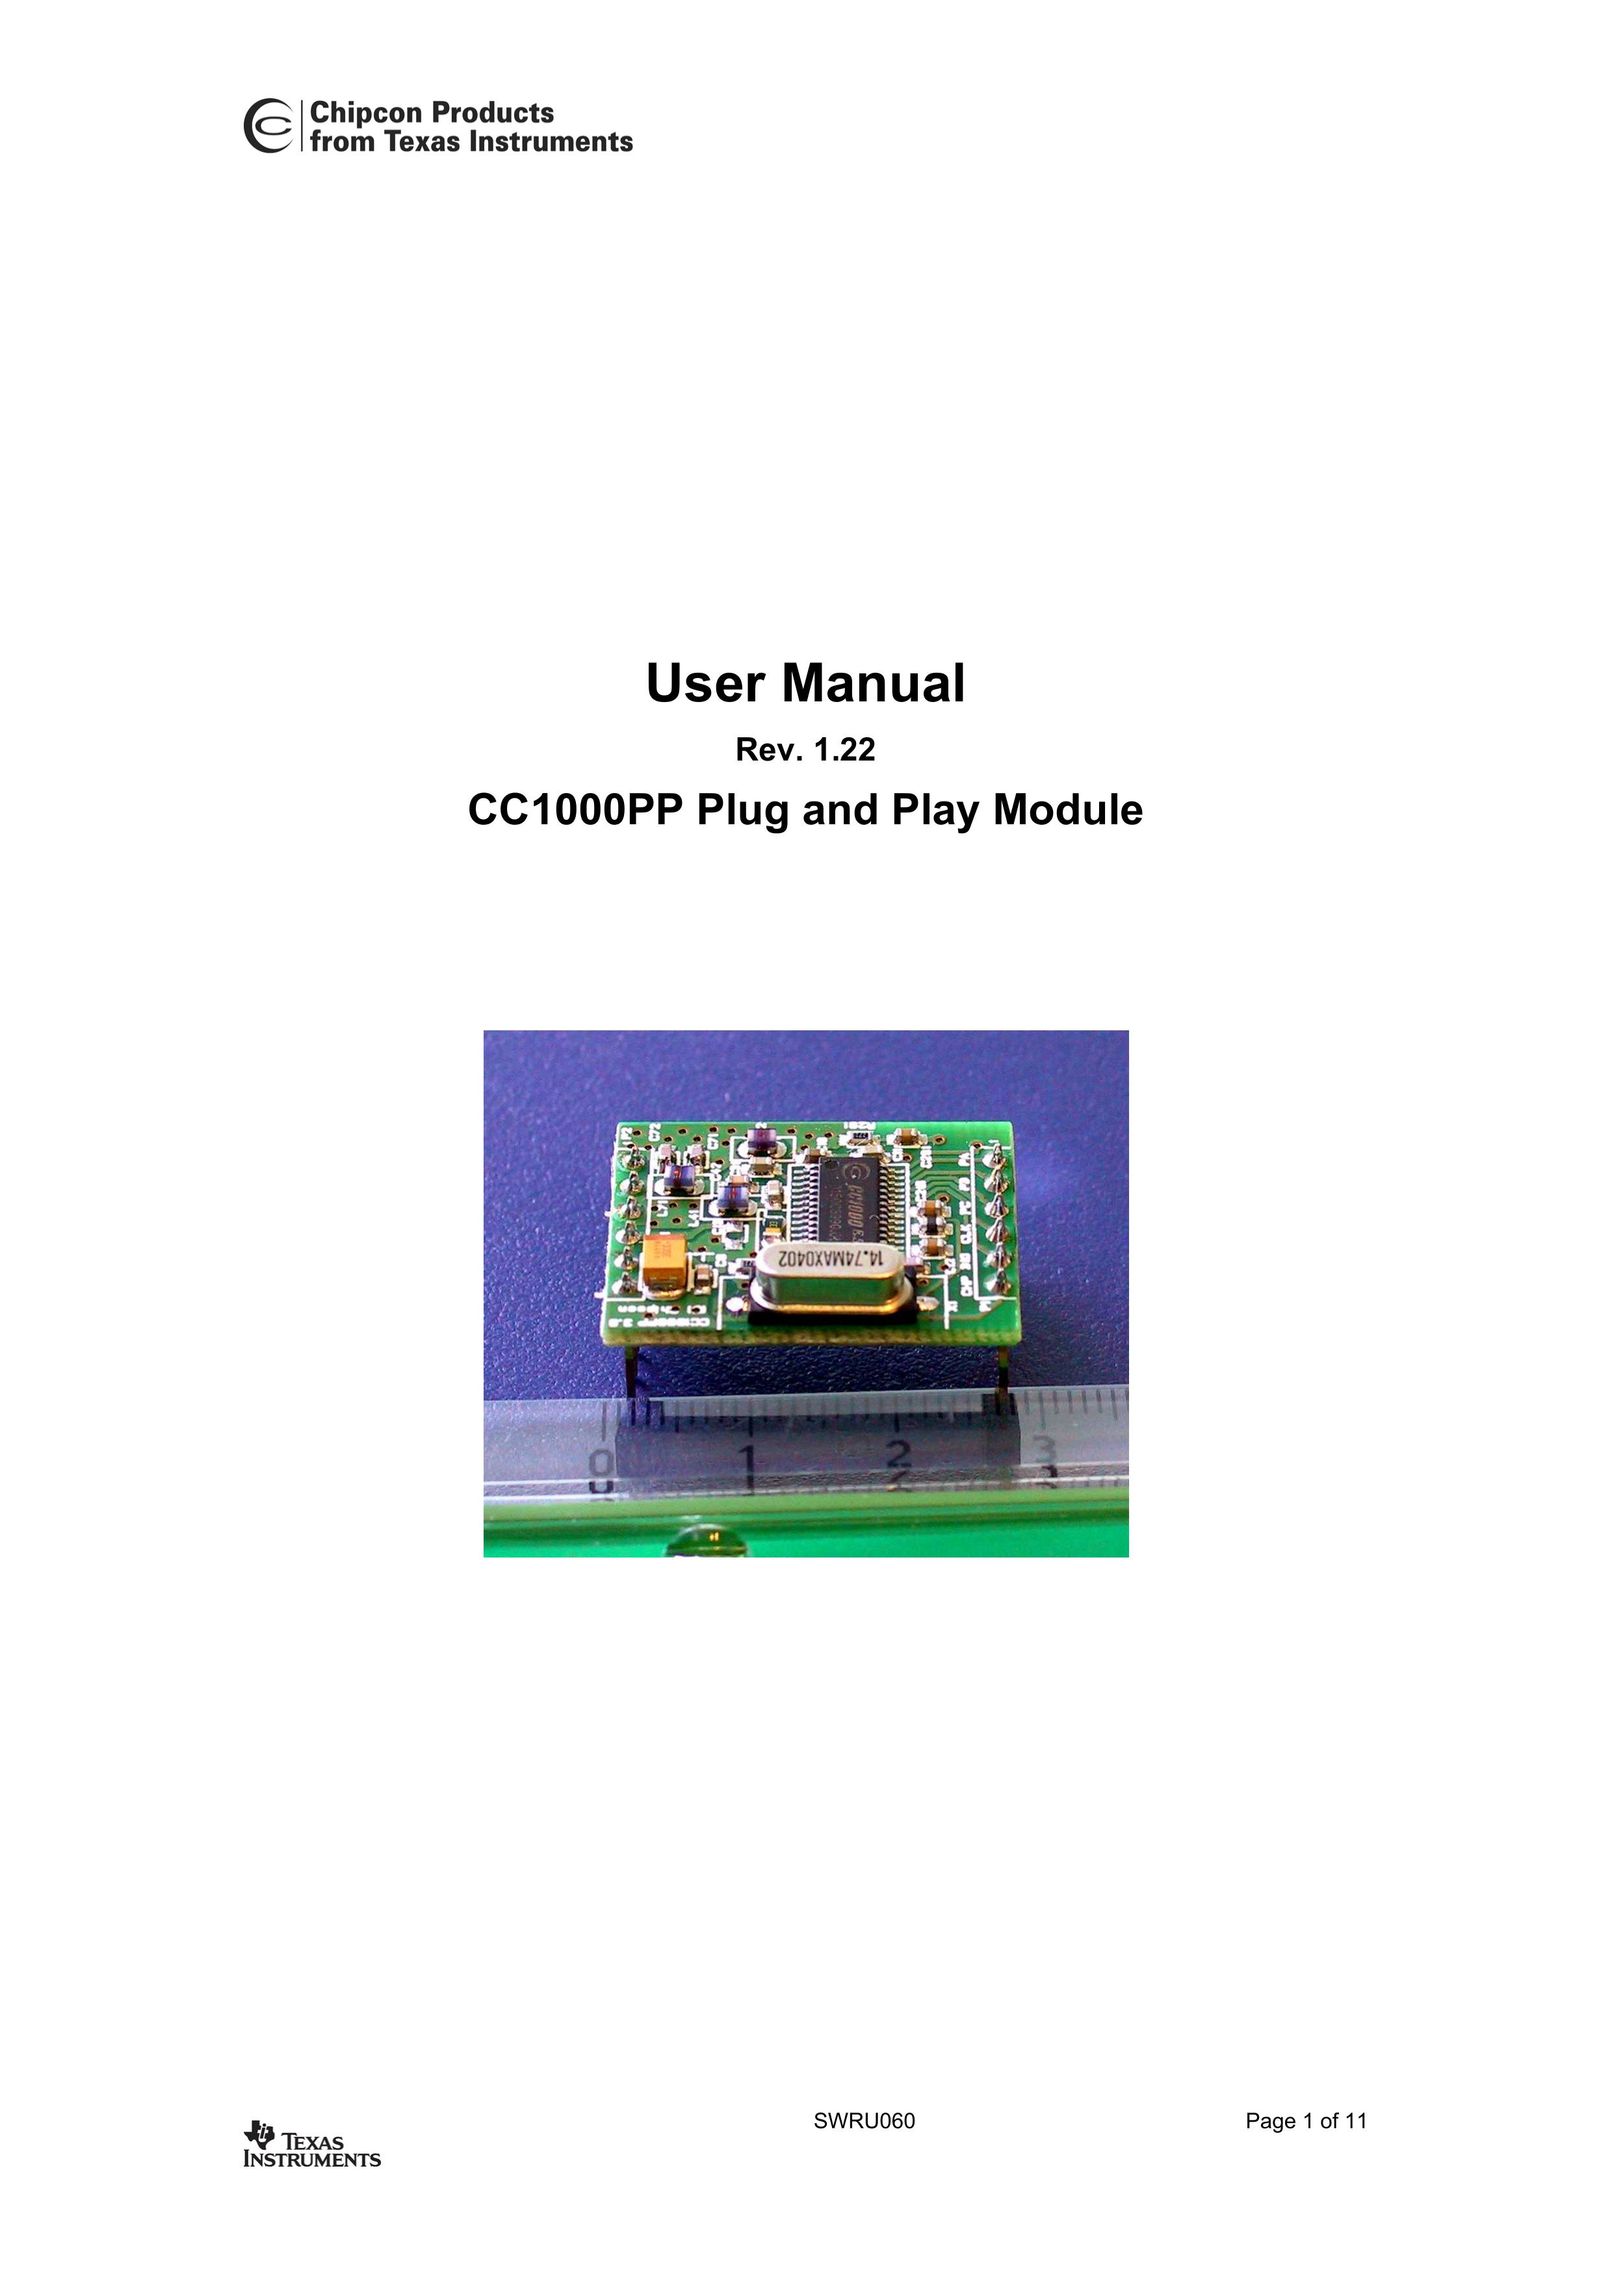 Texas Instruments CC1000PP Car Satellite Radio System User Manual